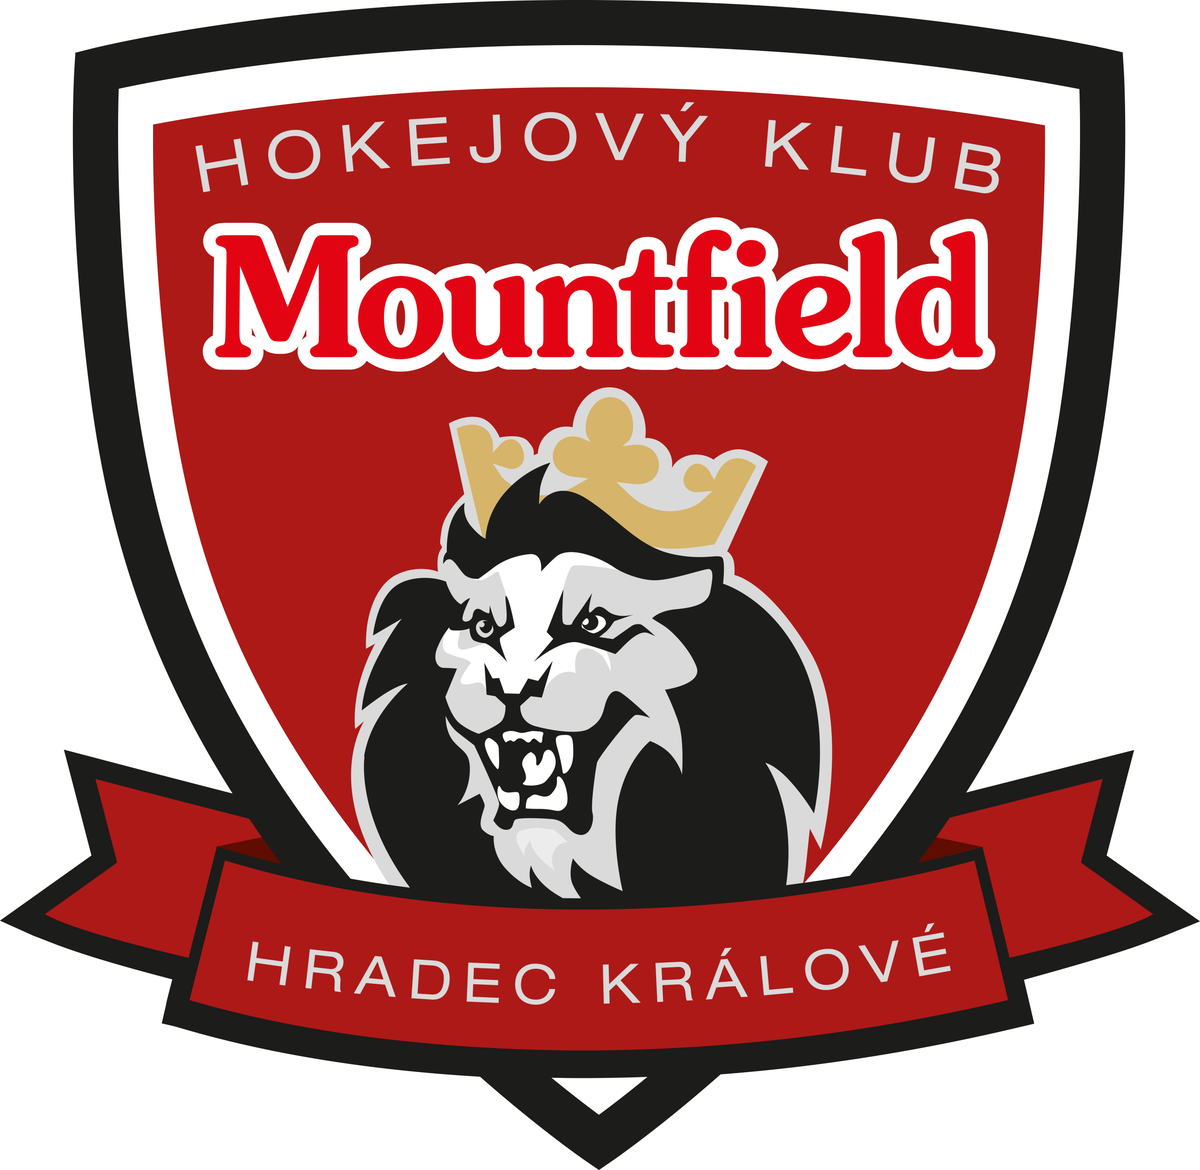 Mountfield Hradec Kralove - team logo